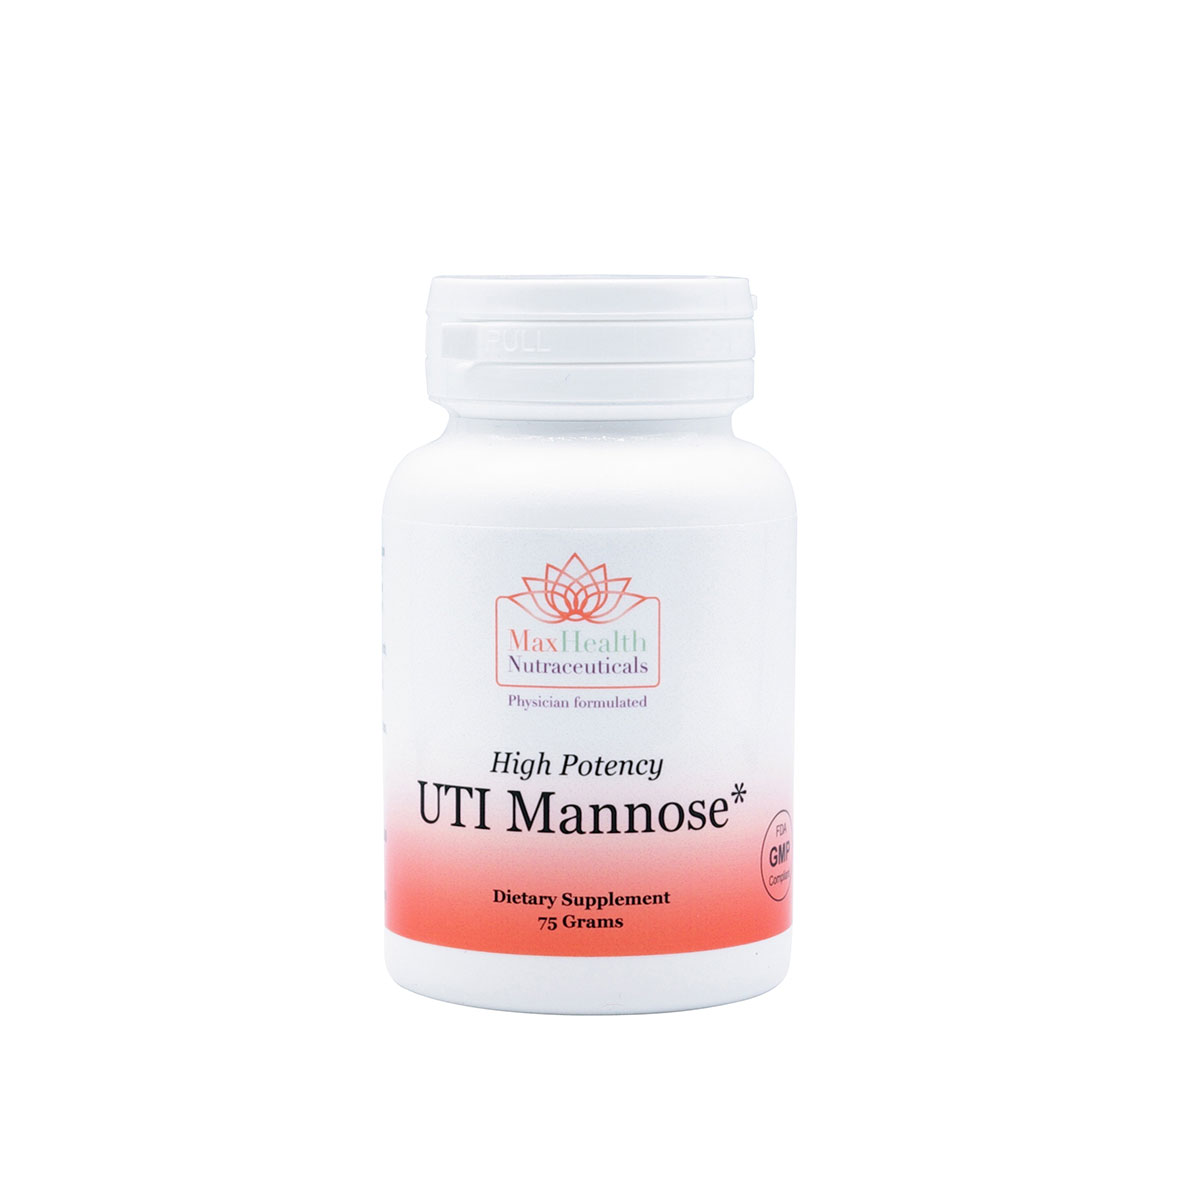 11High Potency UTI Mannose